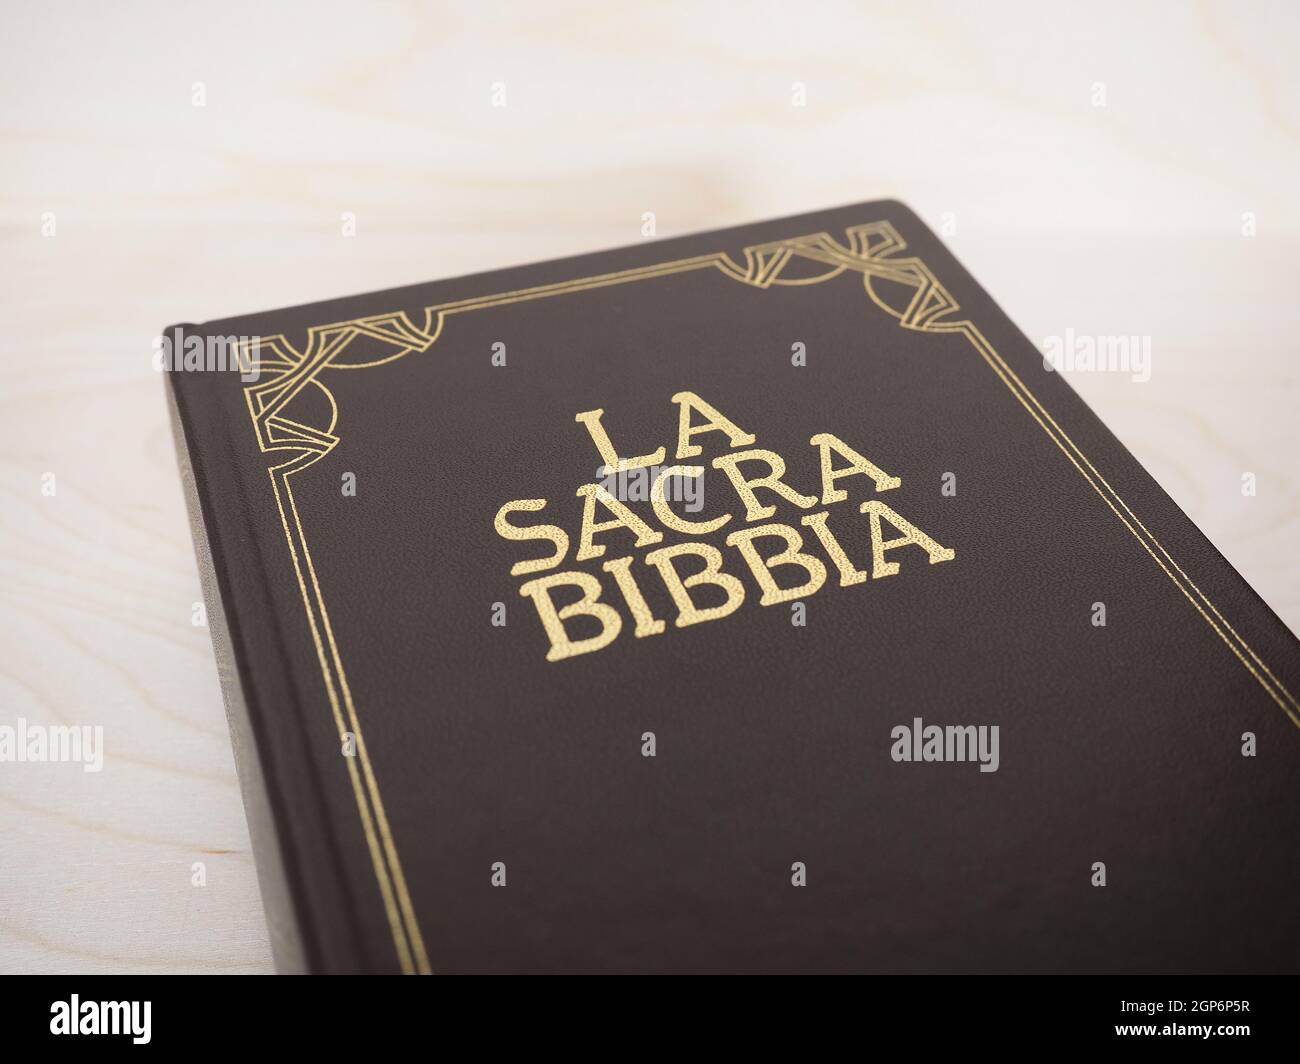 La Sacra Bibbia (translation: The Holy Bible) book Stock Photo - Alamy